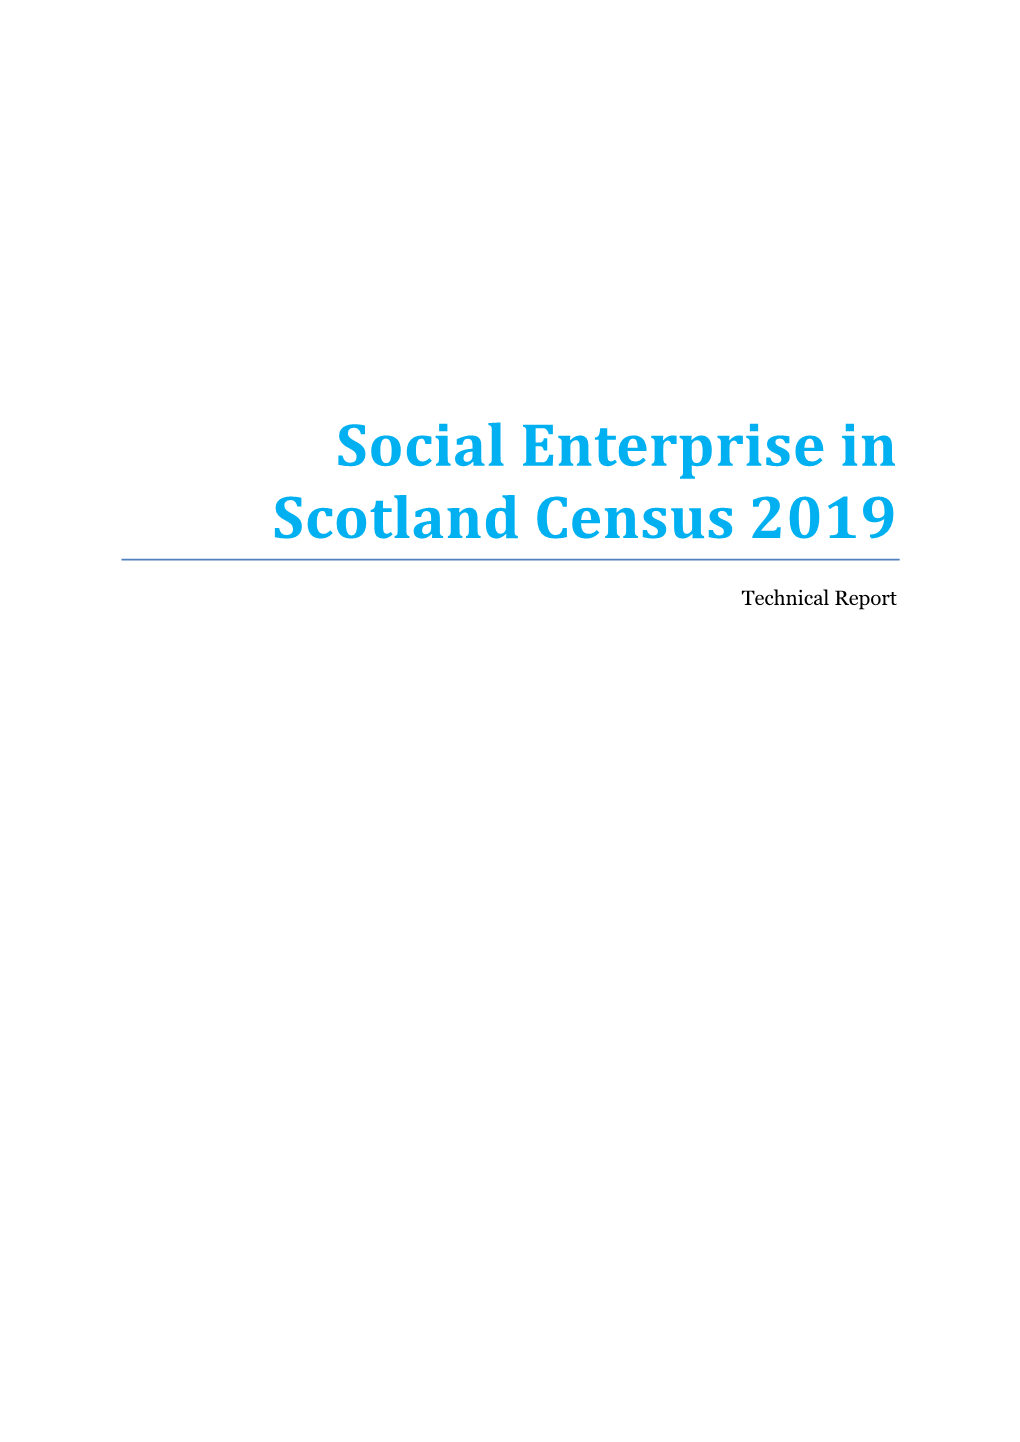 Social Enterprise in Scotland Census 2019